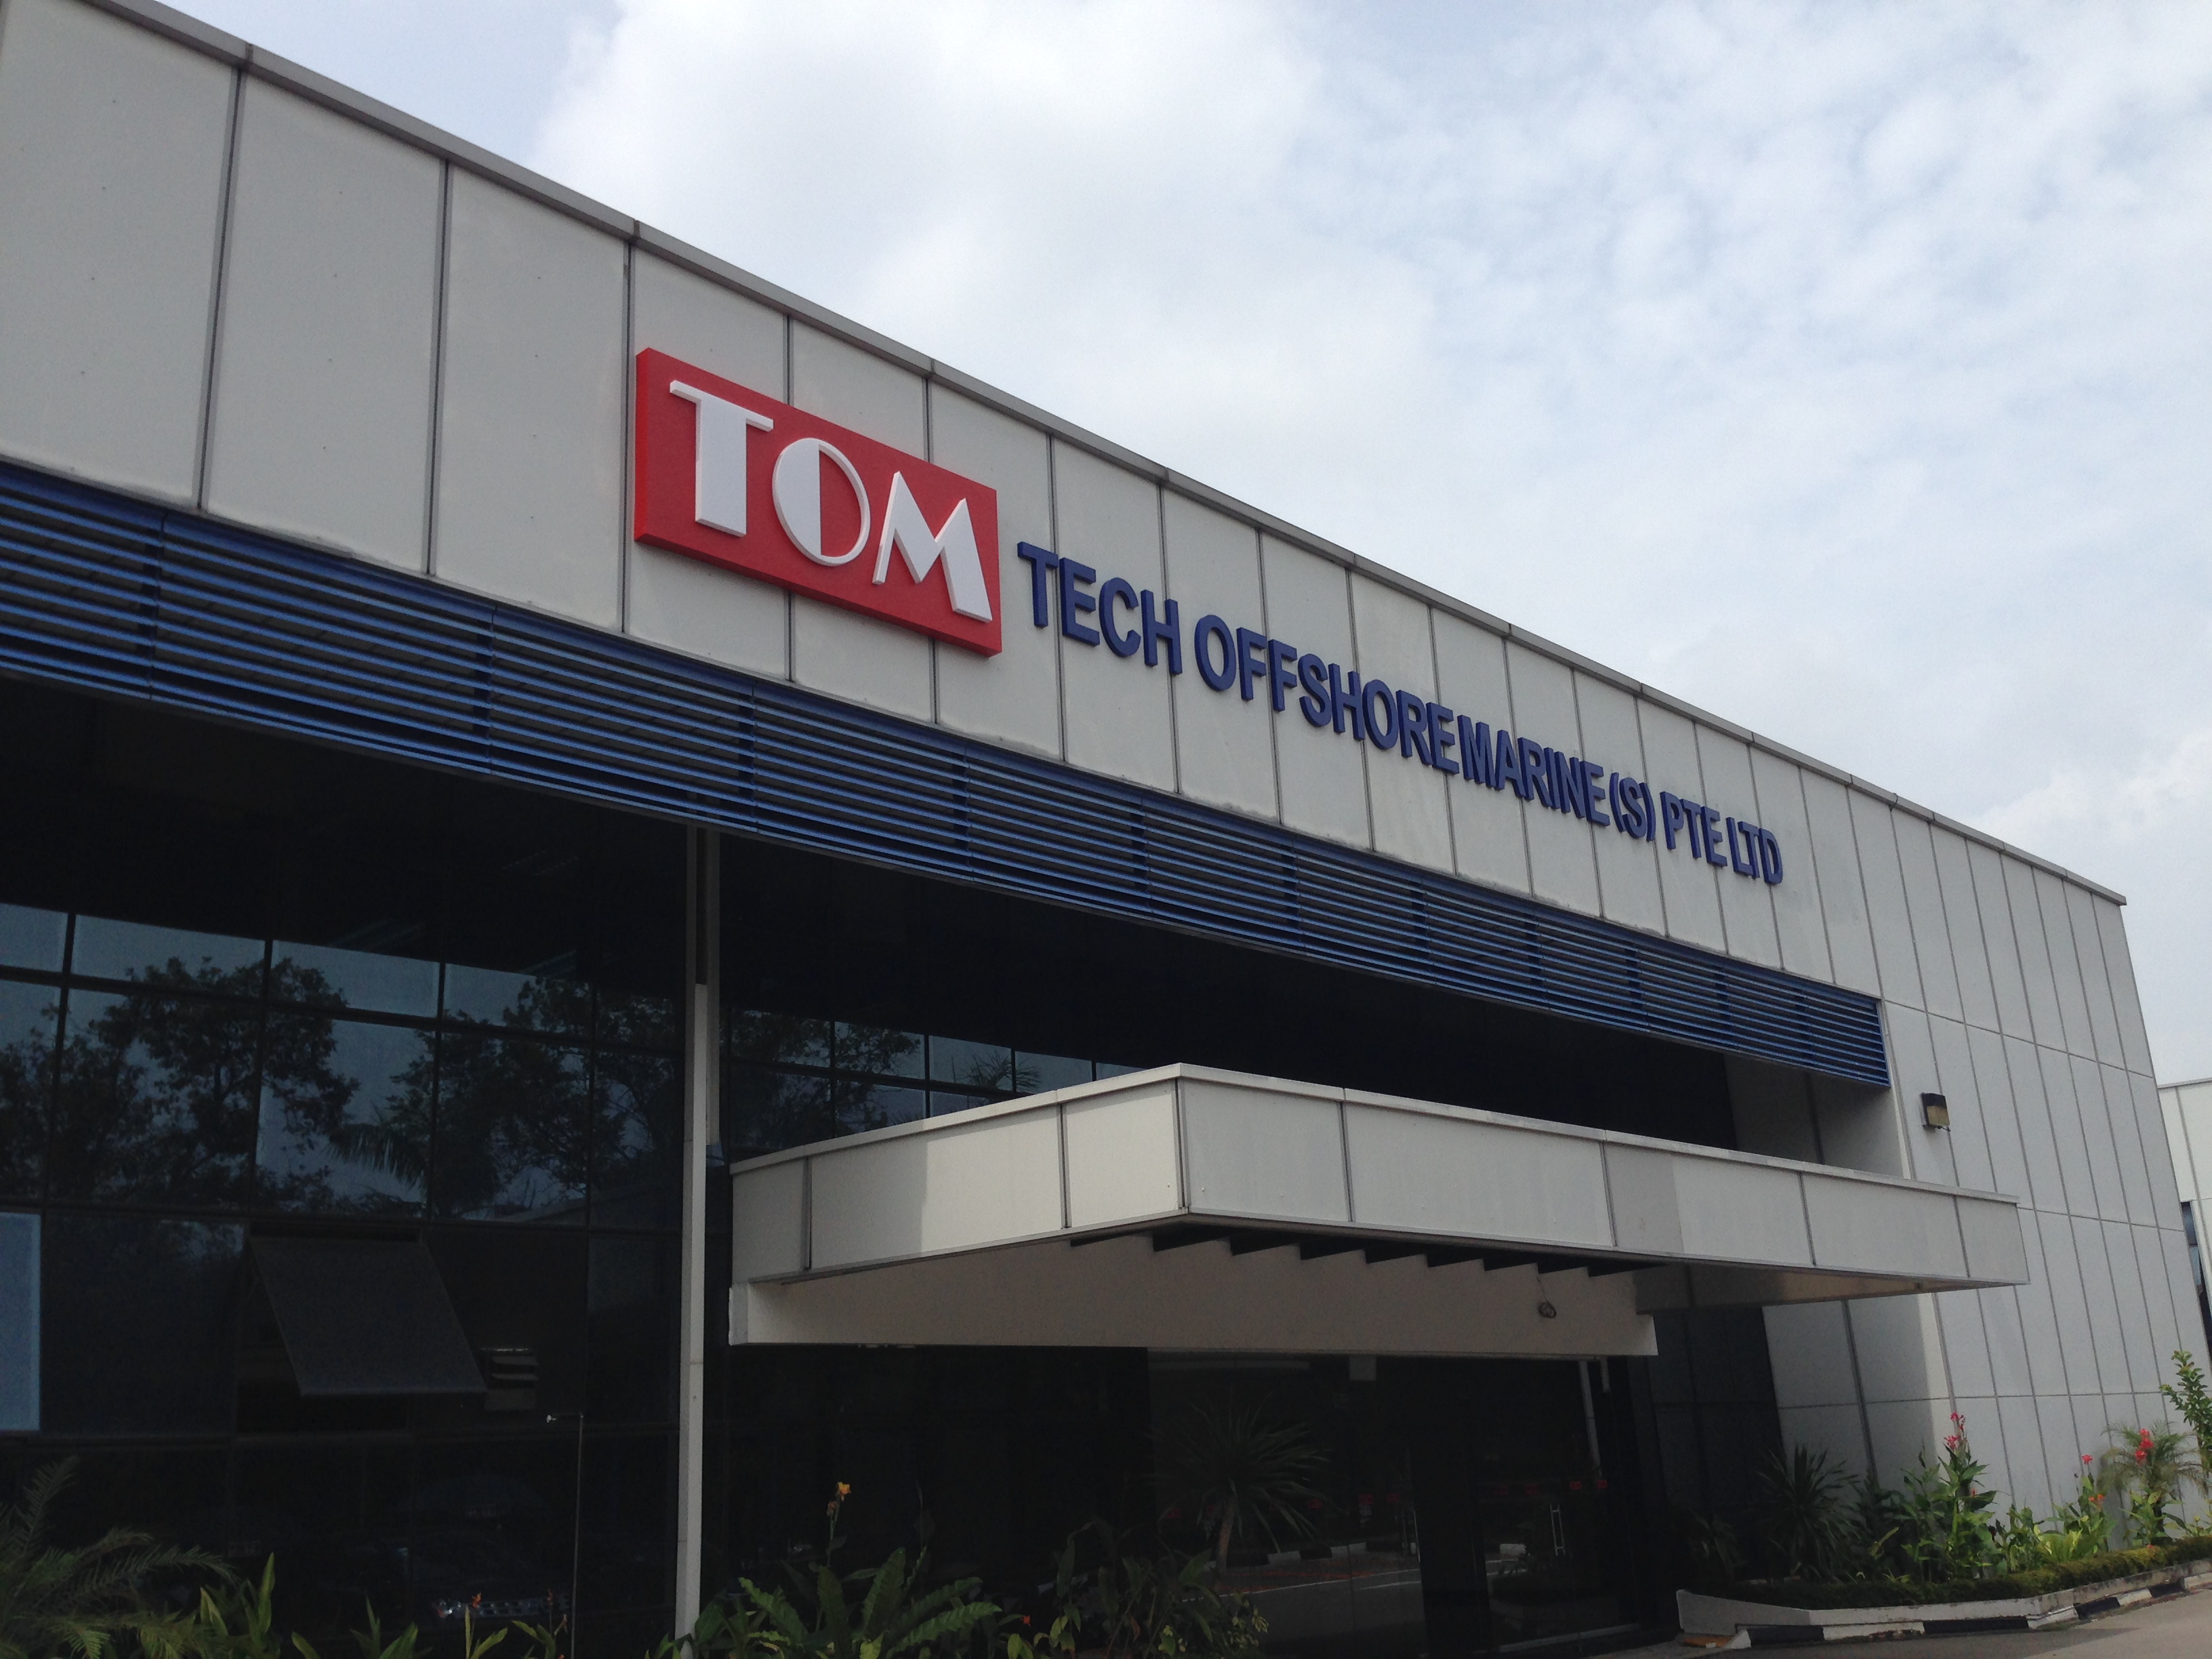 Tom Tech Off Shore Marine (S) Pte Ltd